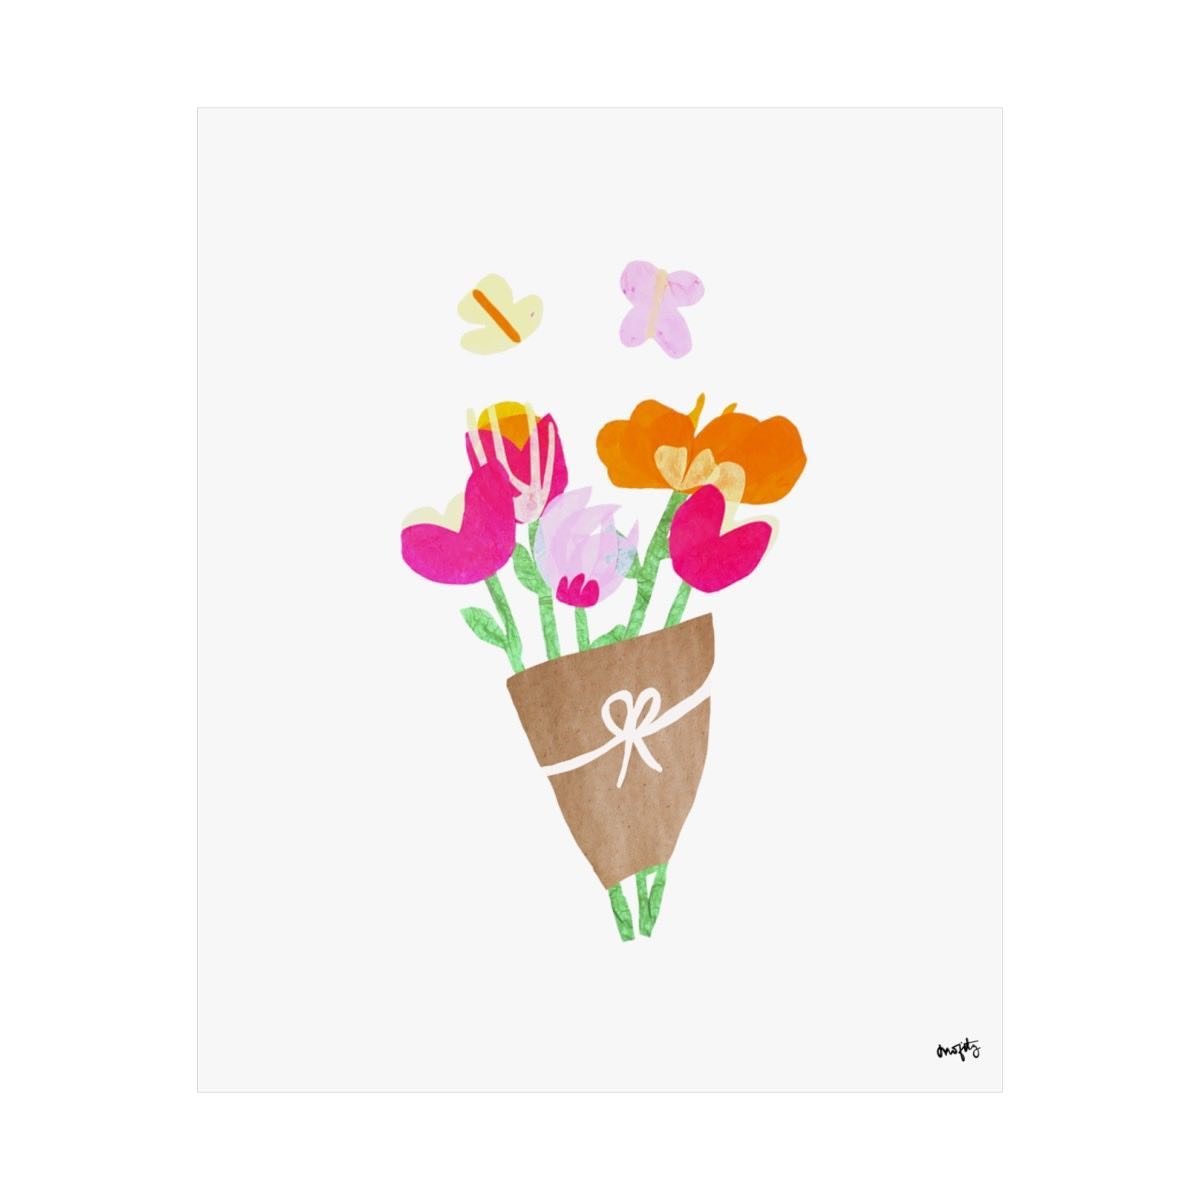 Flowers to brighten your day ❤️🌸

&hellip;&hellip;&hellip;&hellip;

#artwork #painting #sunflower #florals #bouquet #watercolor #arrangement #handpainted #girl #artsy #creative #inspiration #garden #tulip #watercolour #botanical #nature #artist #sty